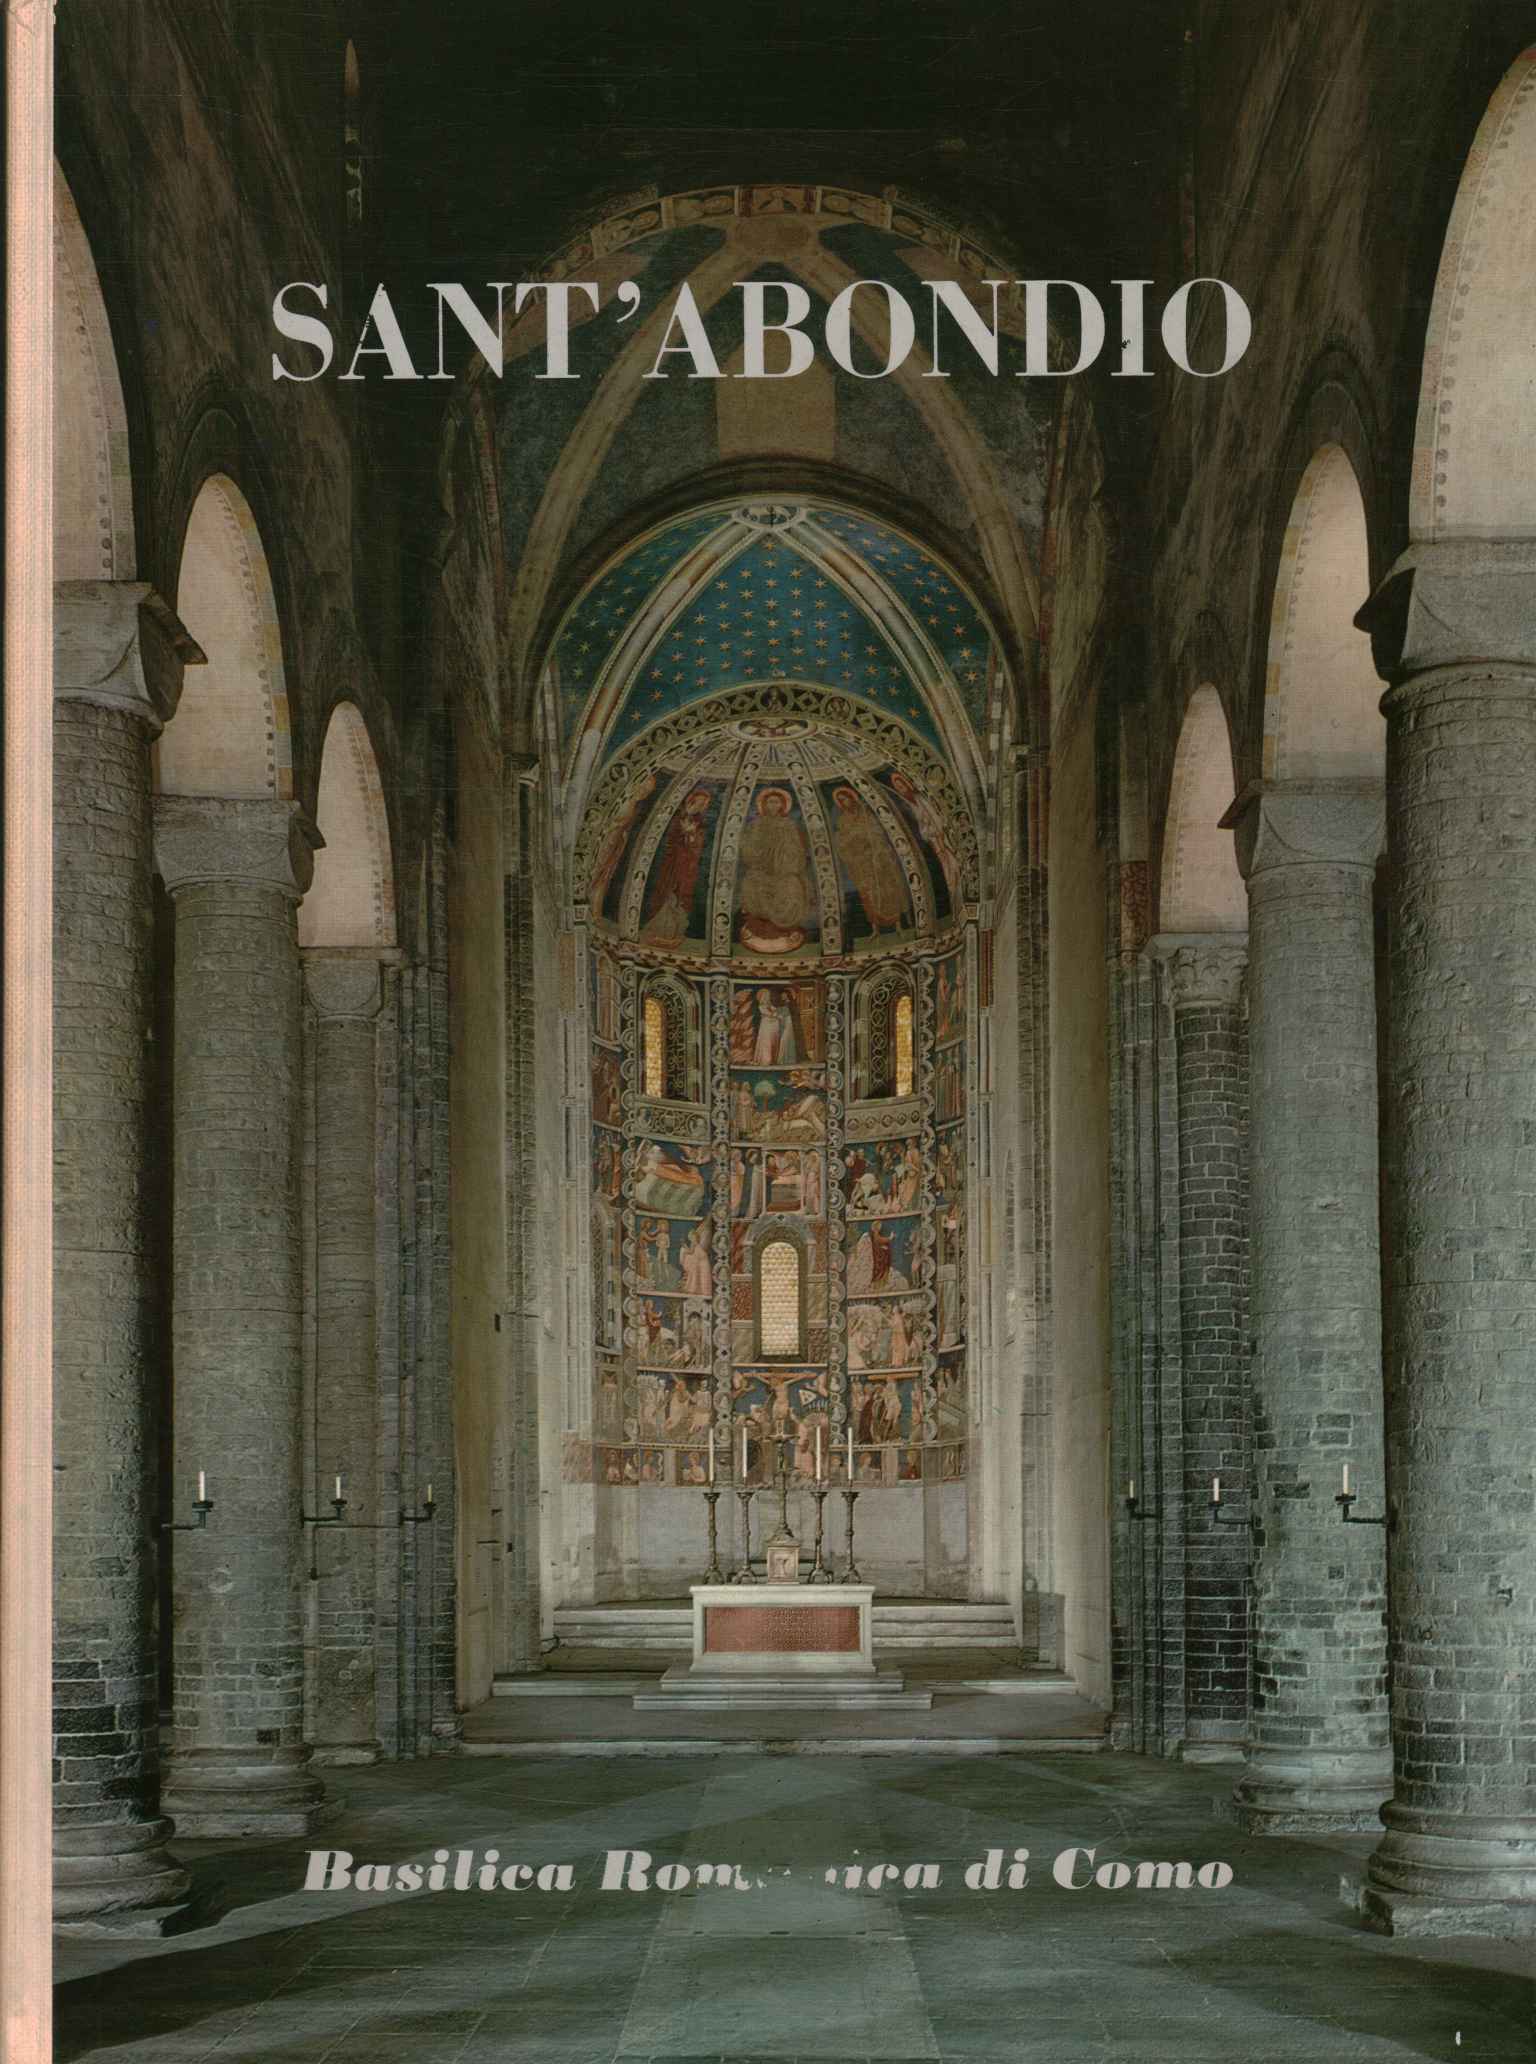 Sant'Abondio. The Romanic Basilica